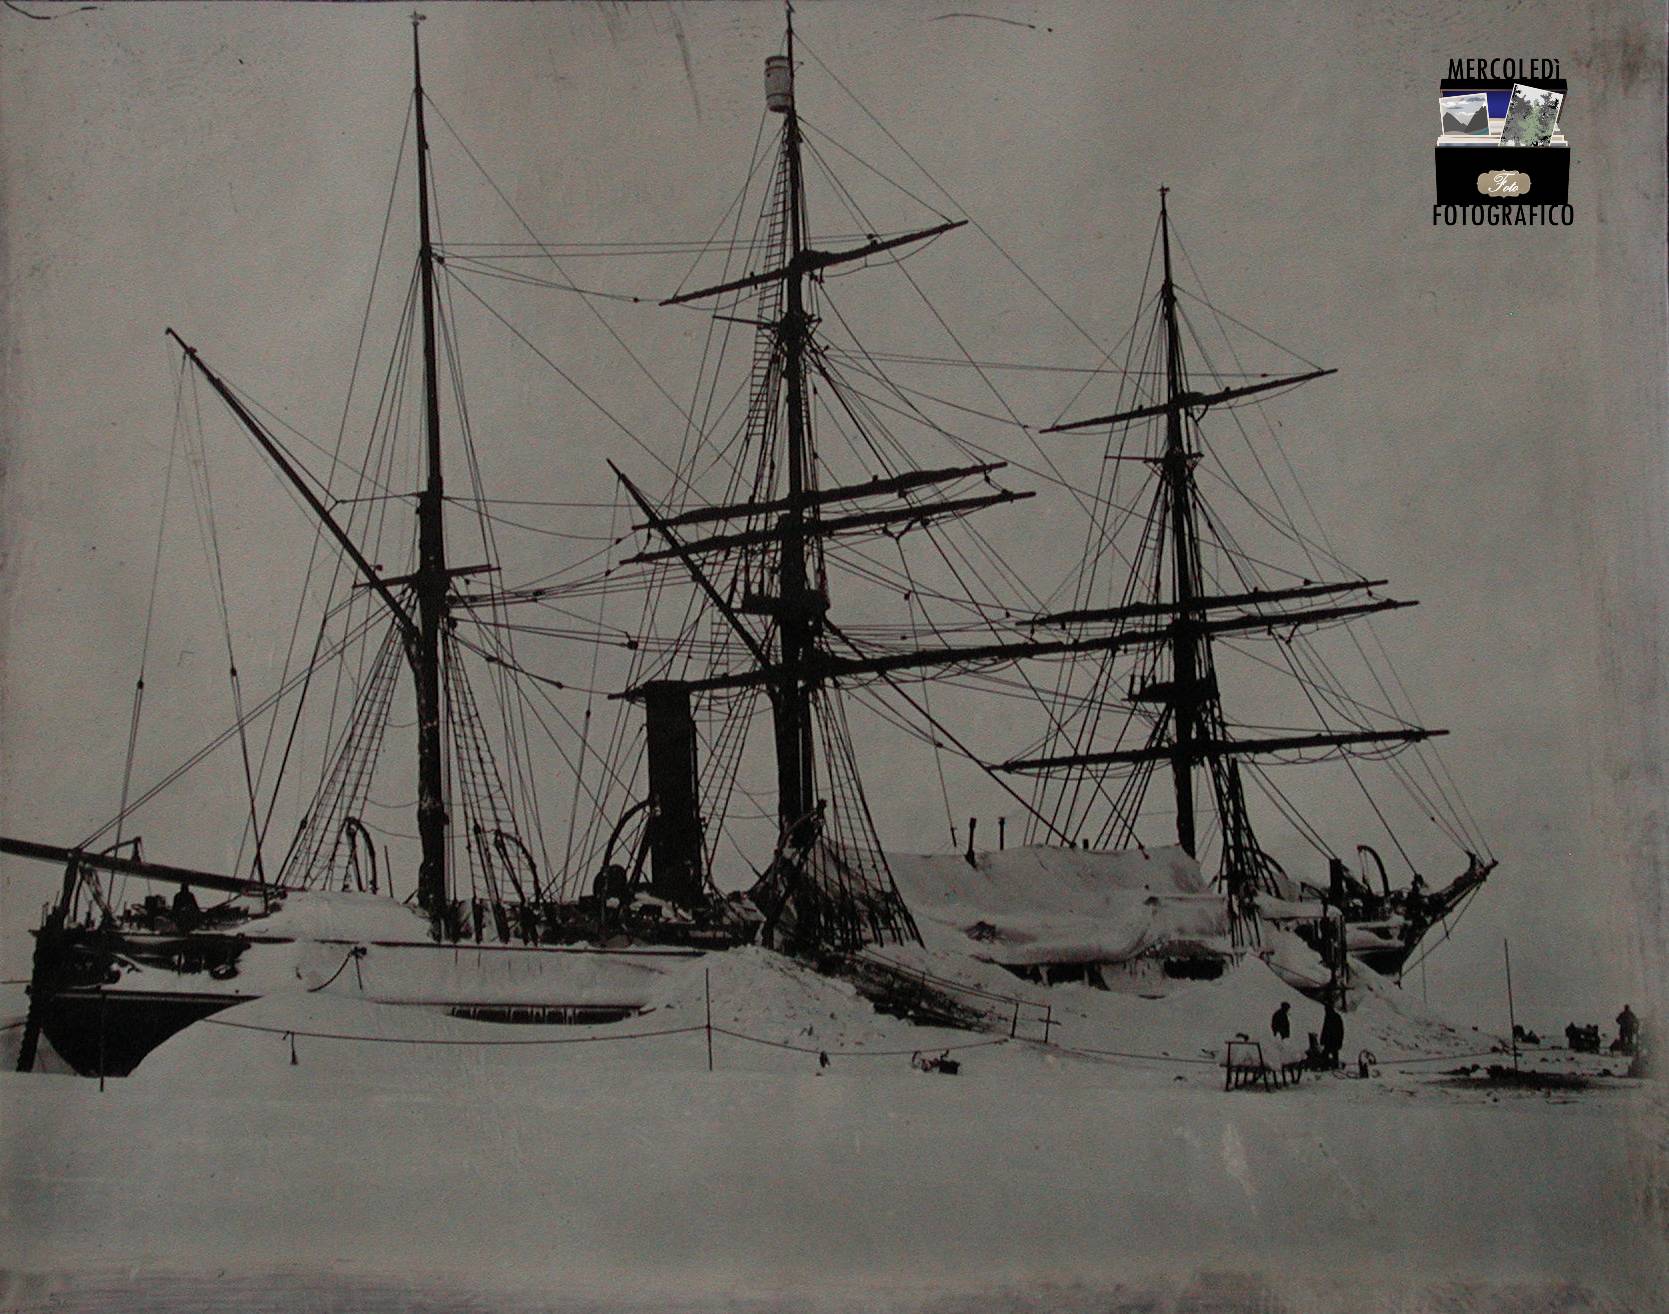 Discovery Expedition – Spedizione in Antartide (1901-1904)